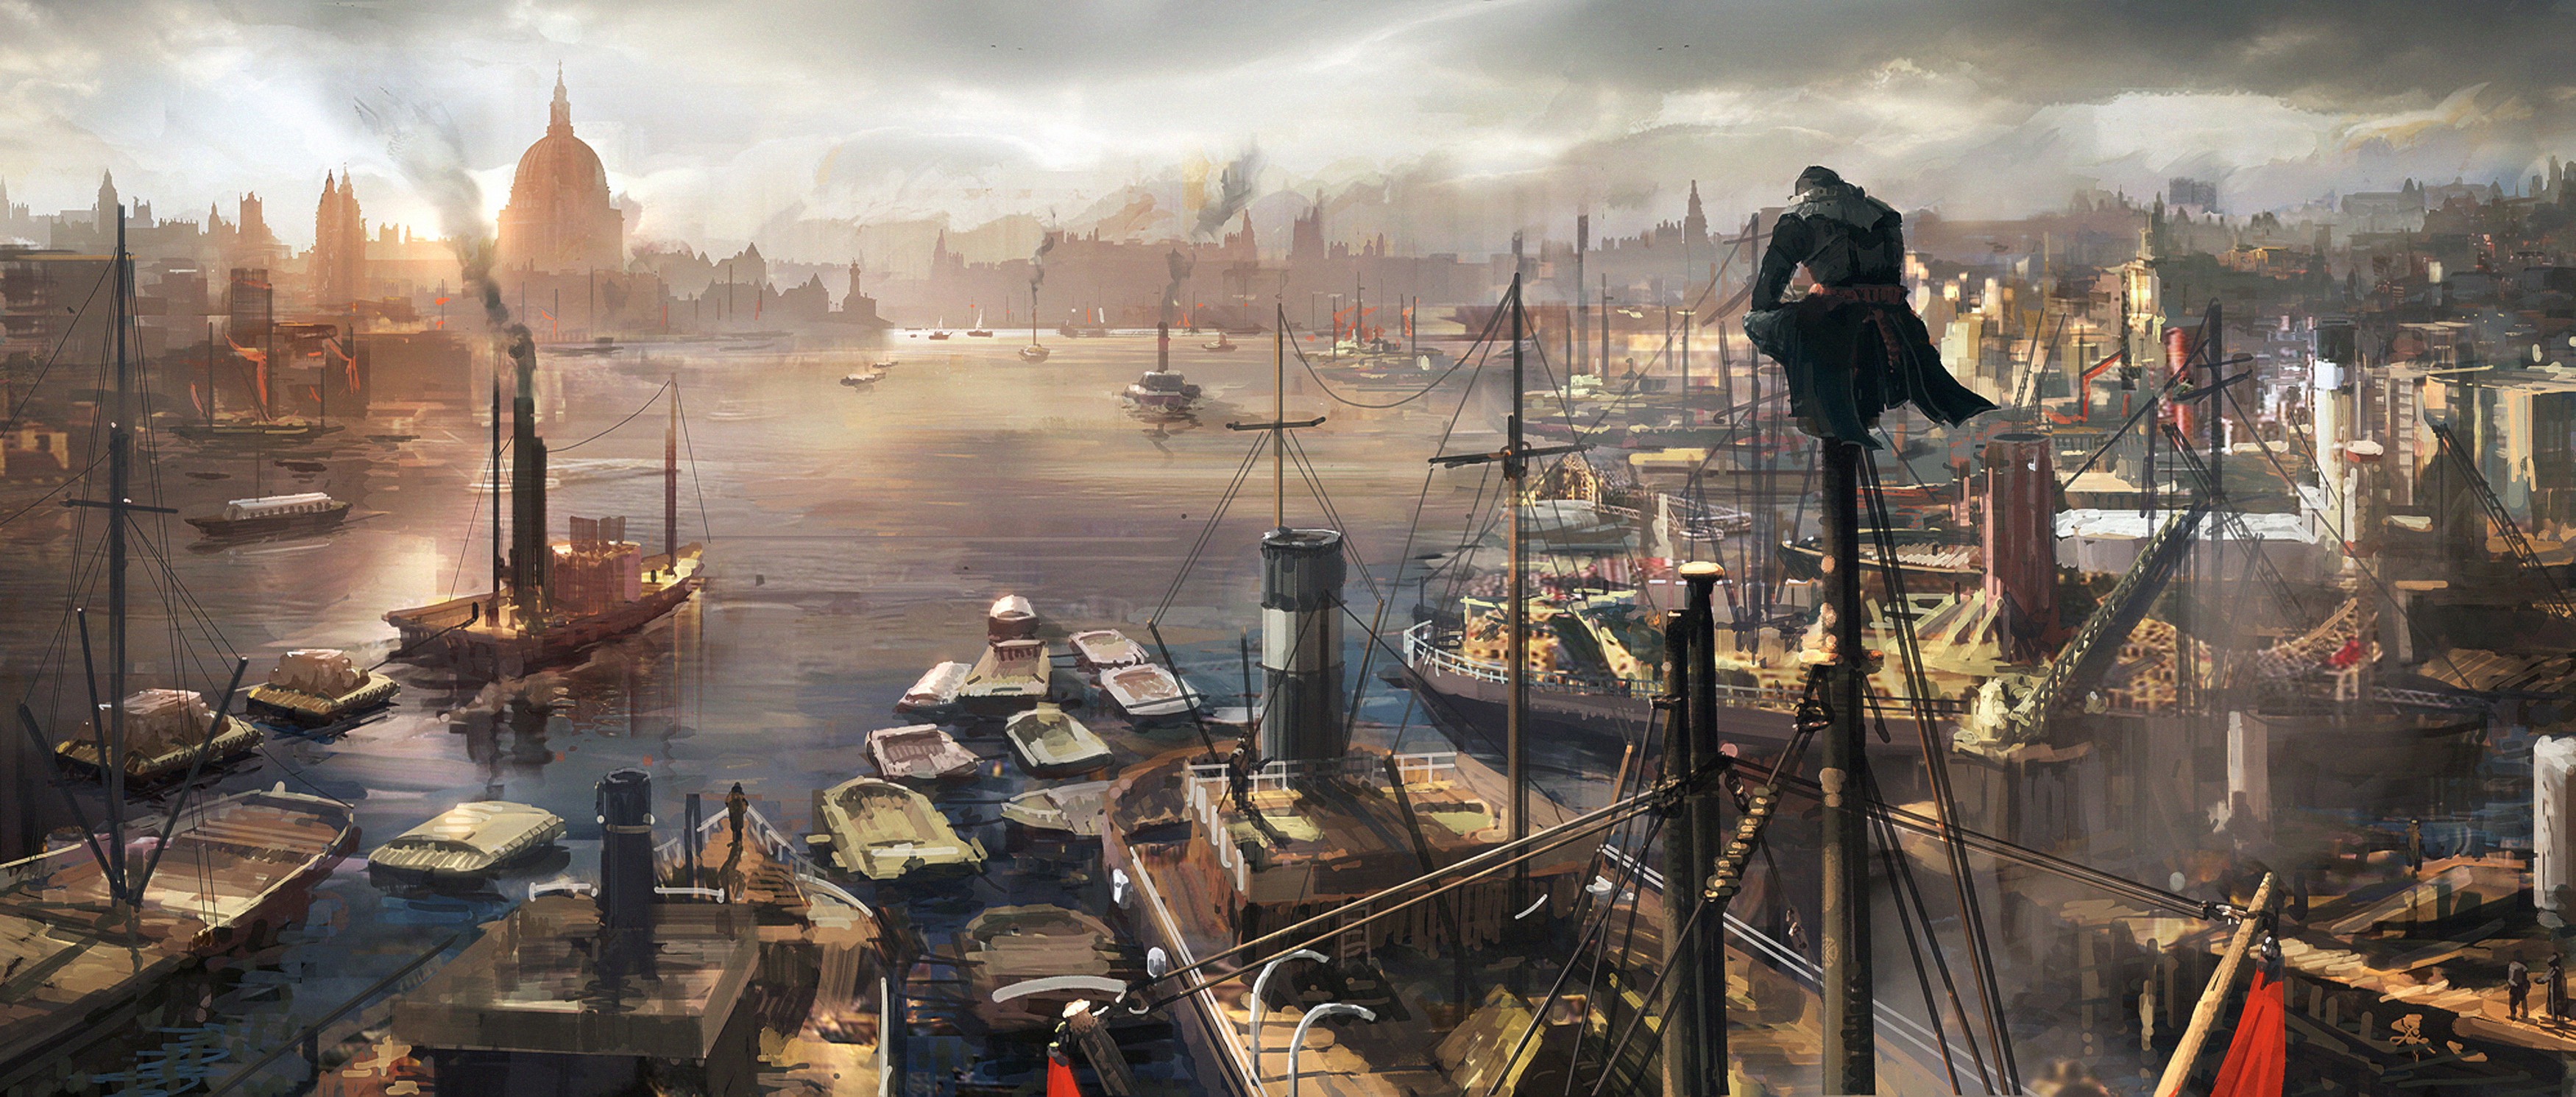 Assassins-Creed-Syndicate_2015_05-12-15_016.jpg